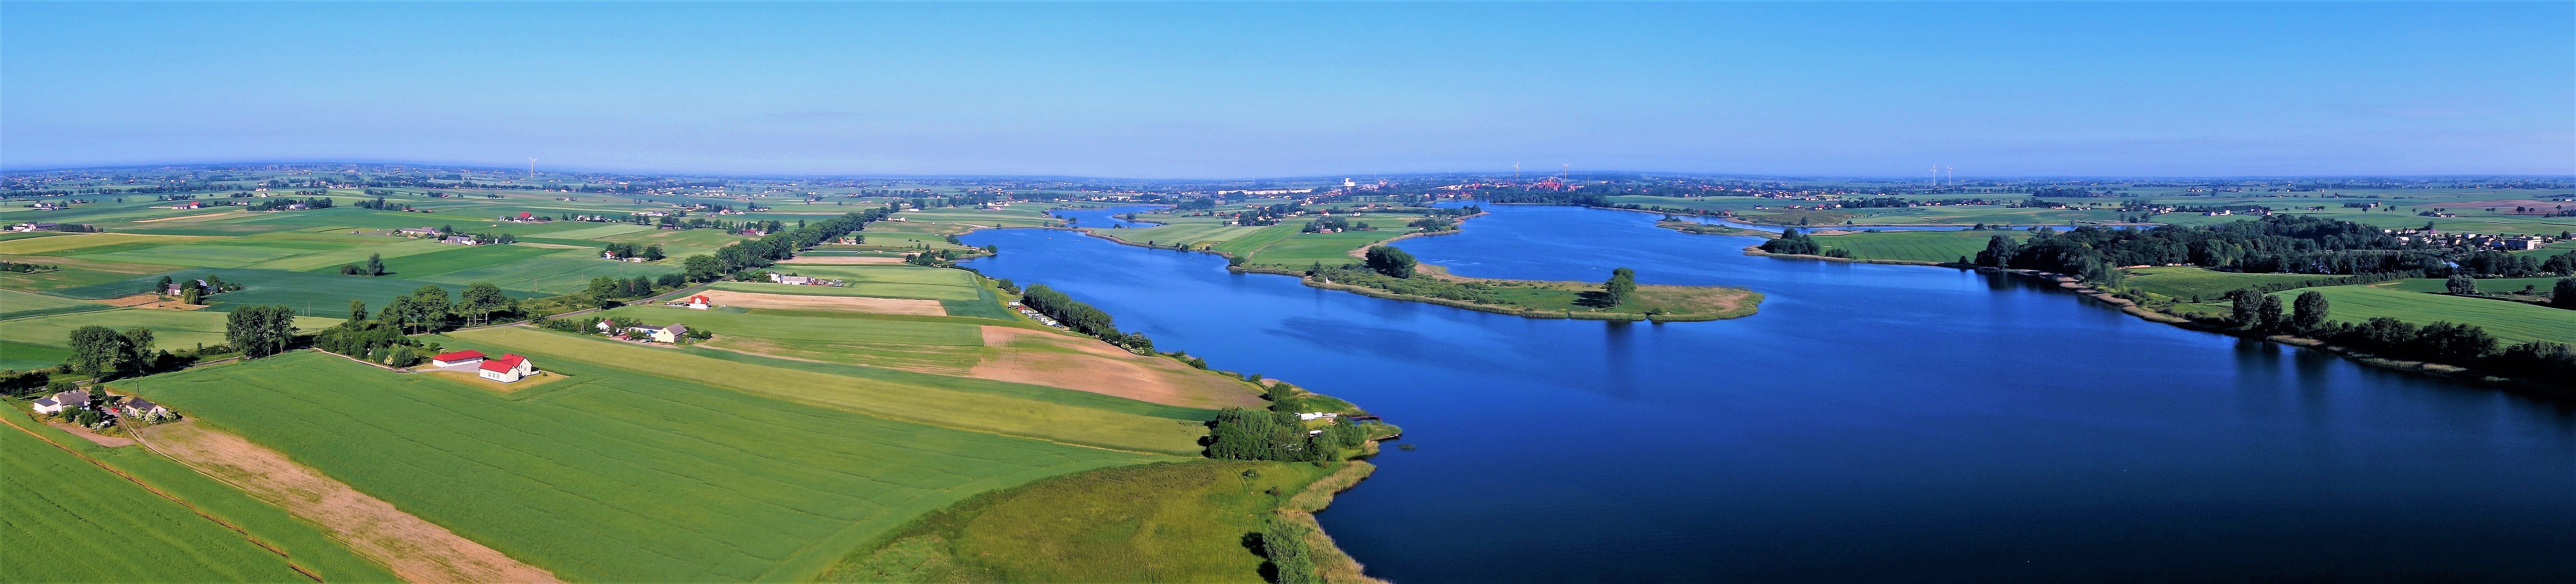 Chełmżyńskie lake landscape